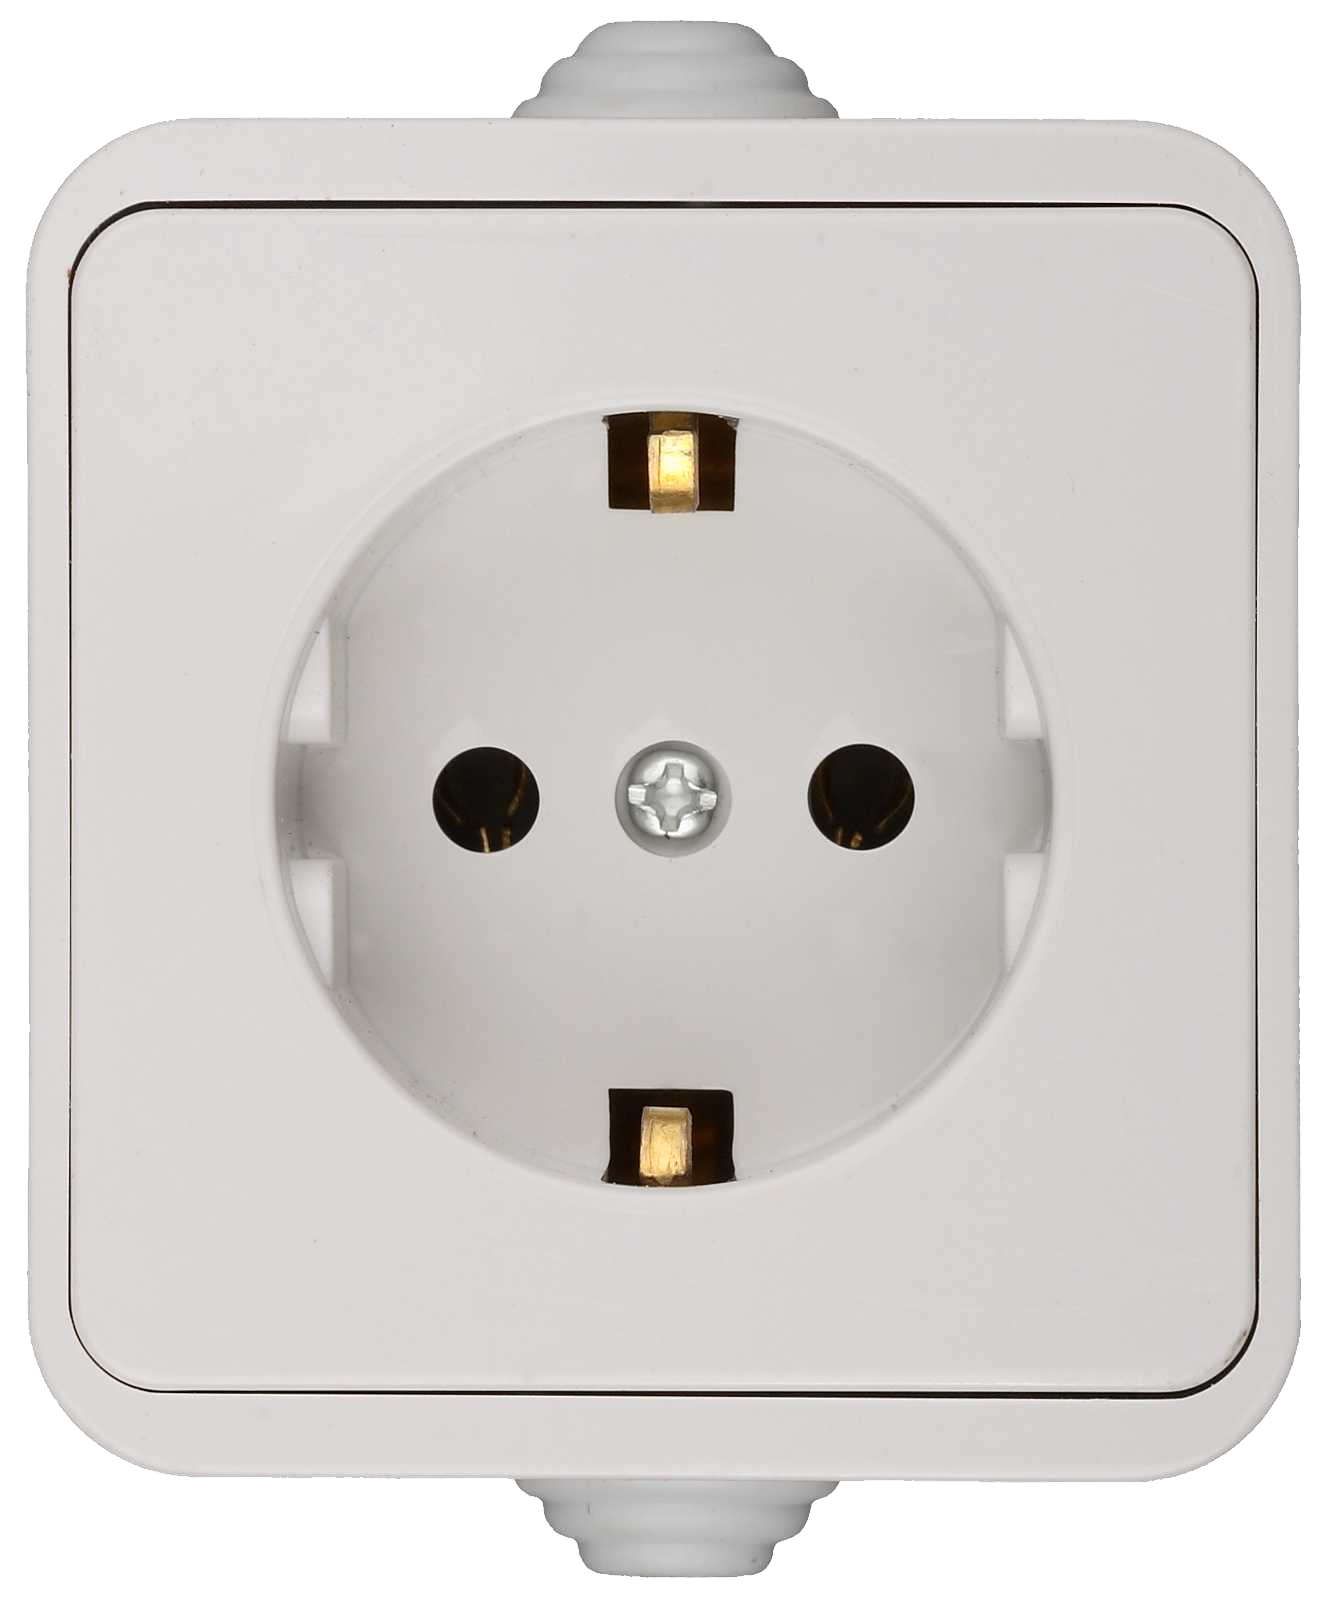 Power socket PNG image free Download 